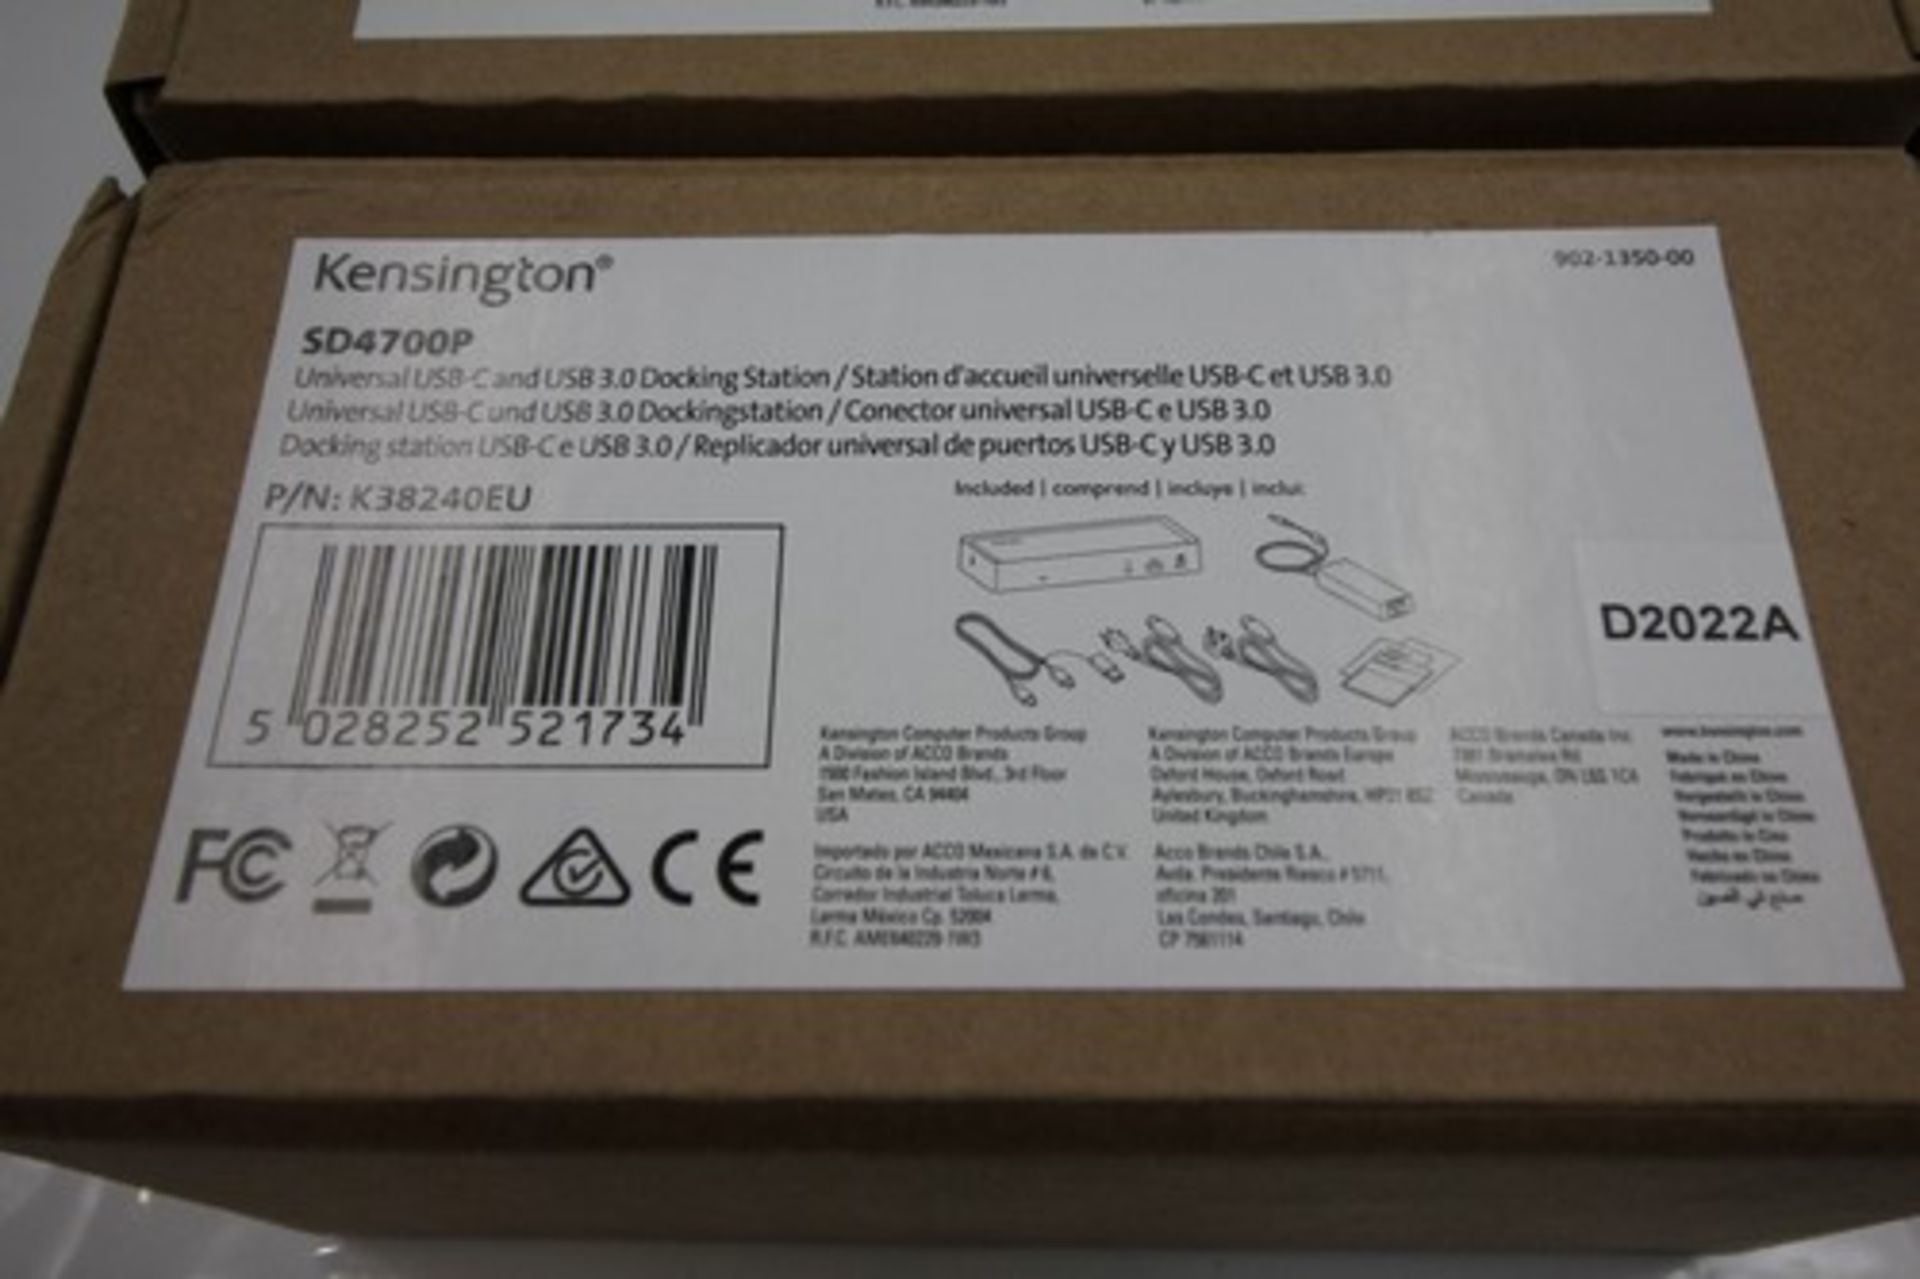 2 x Kensington universal USB-C + USB 3.0 dual display docking stations, Model SD4700P - New in - Image 2 of 2